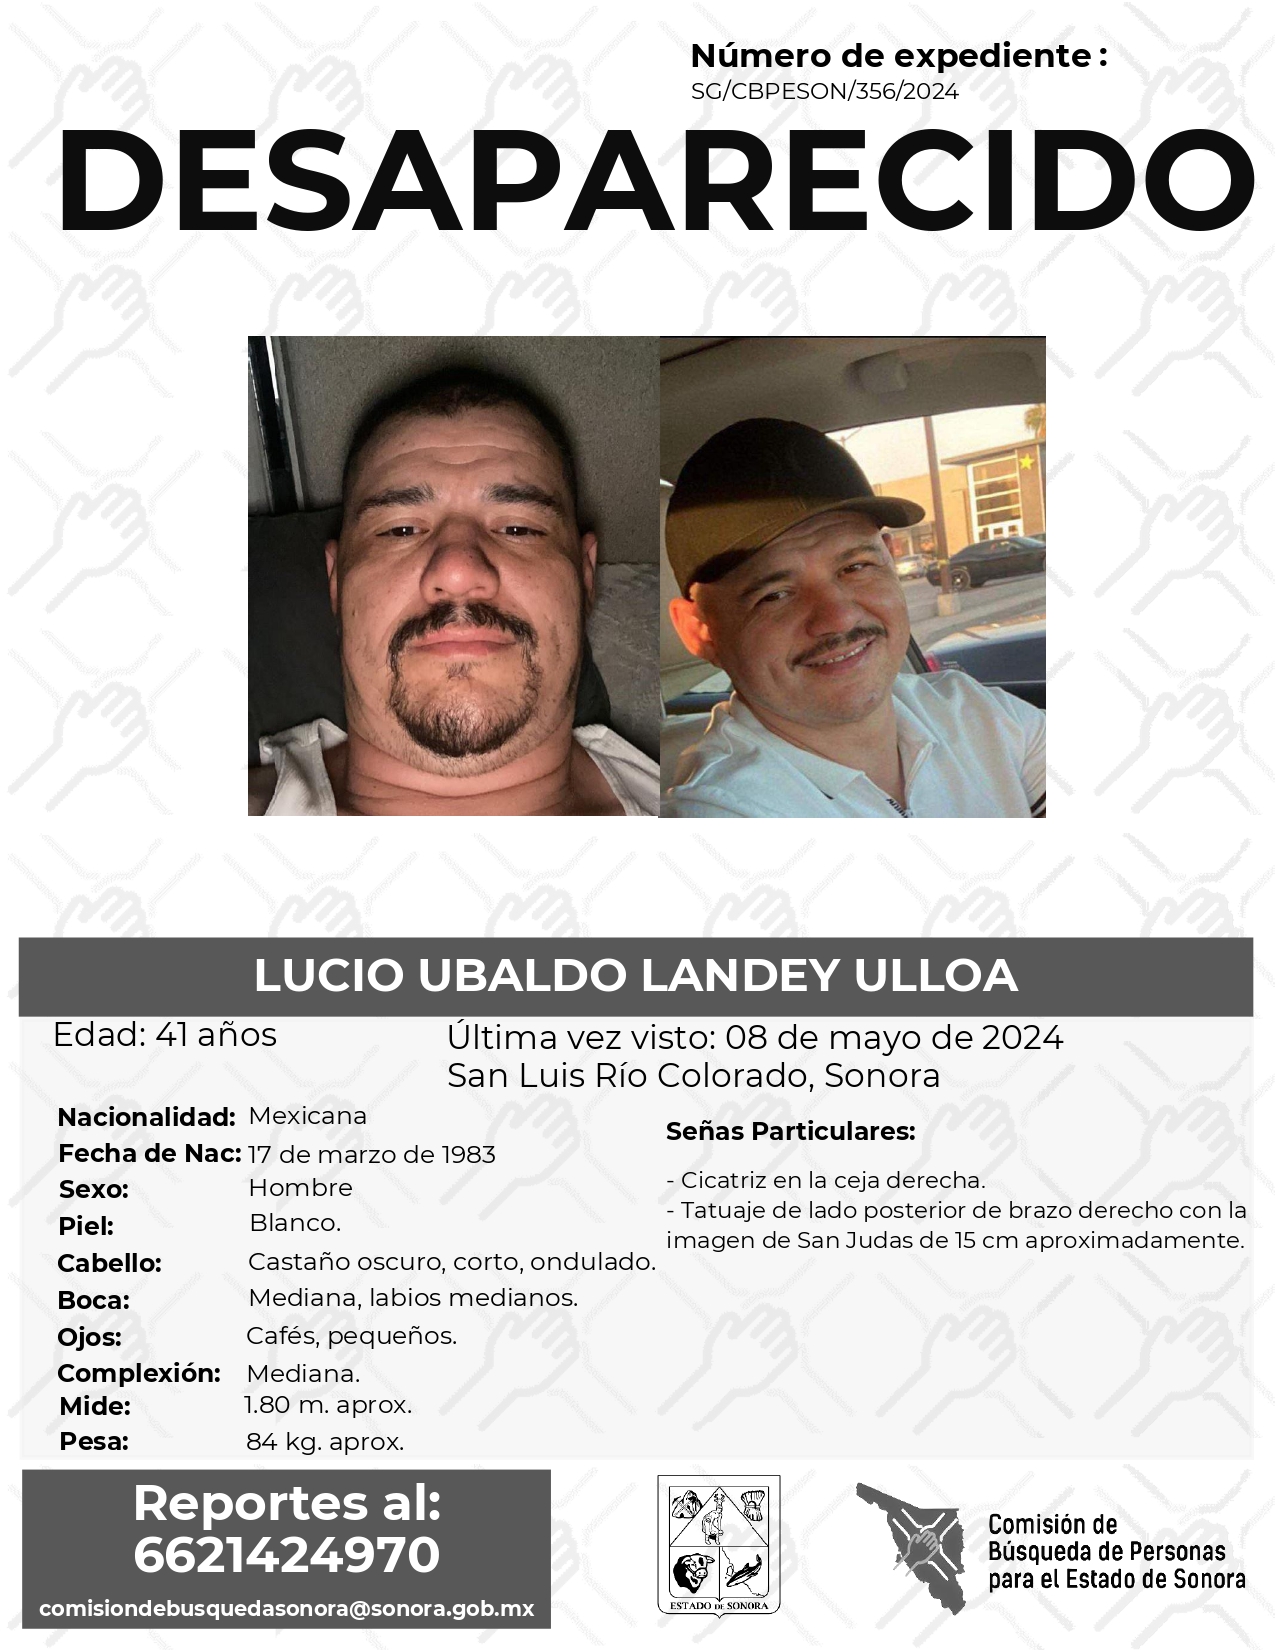 LUCIO UBALDO LANDEY ULLOA - DESAPARECIDO